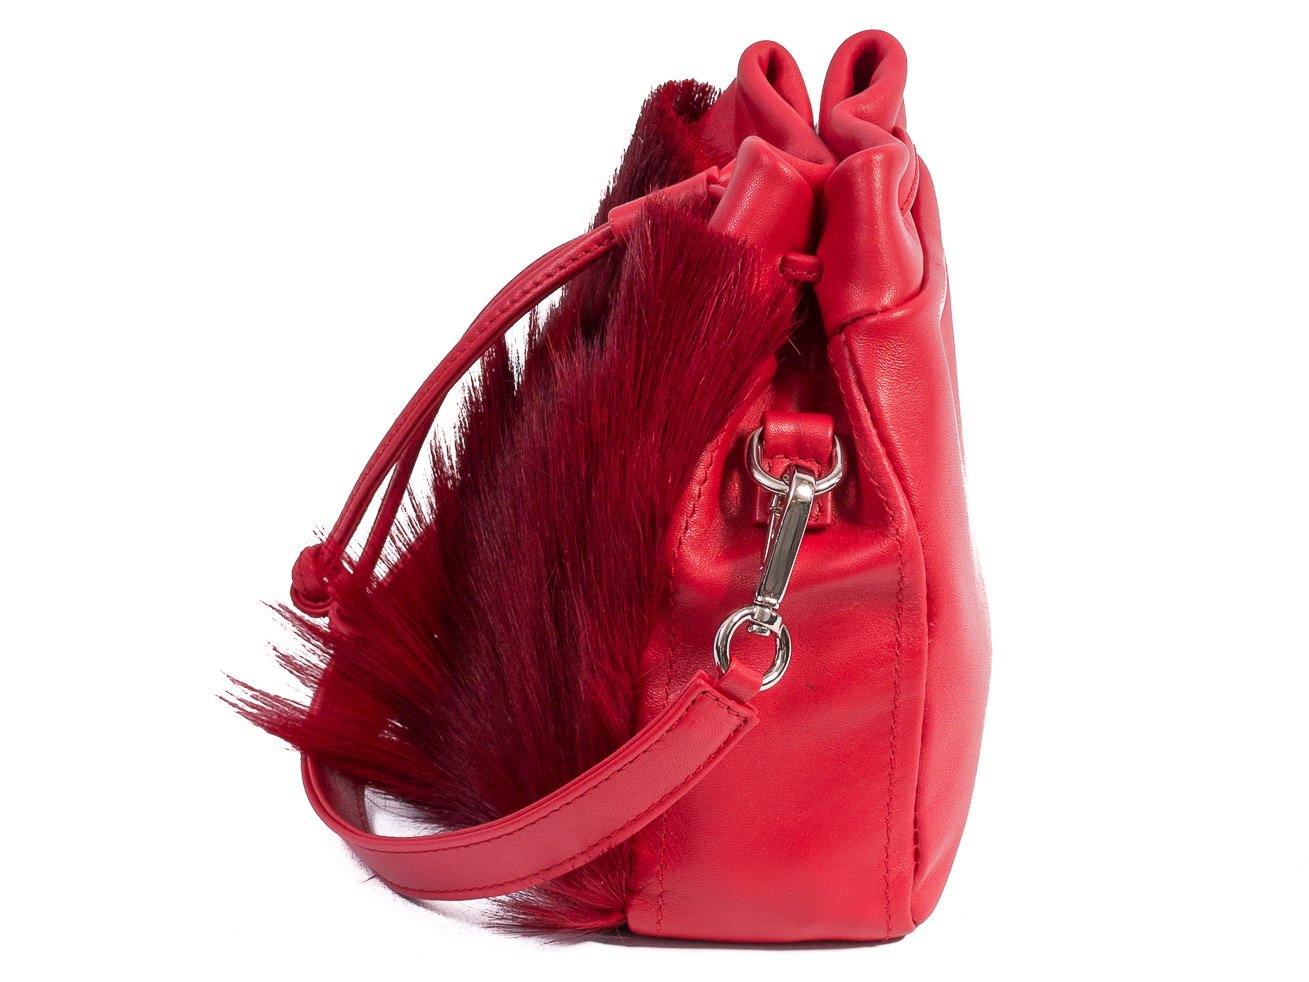 sherene melinda springbok hair-on-hide red leather pouch bag Fan side